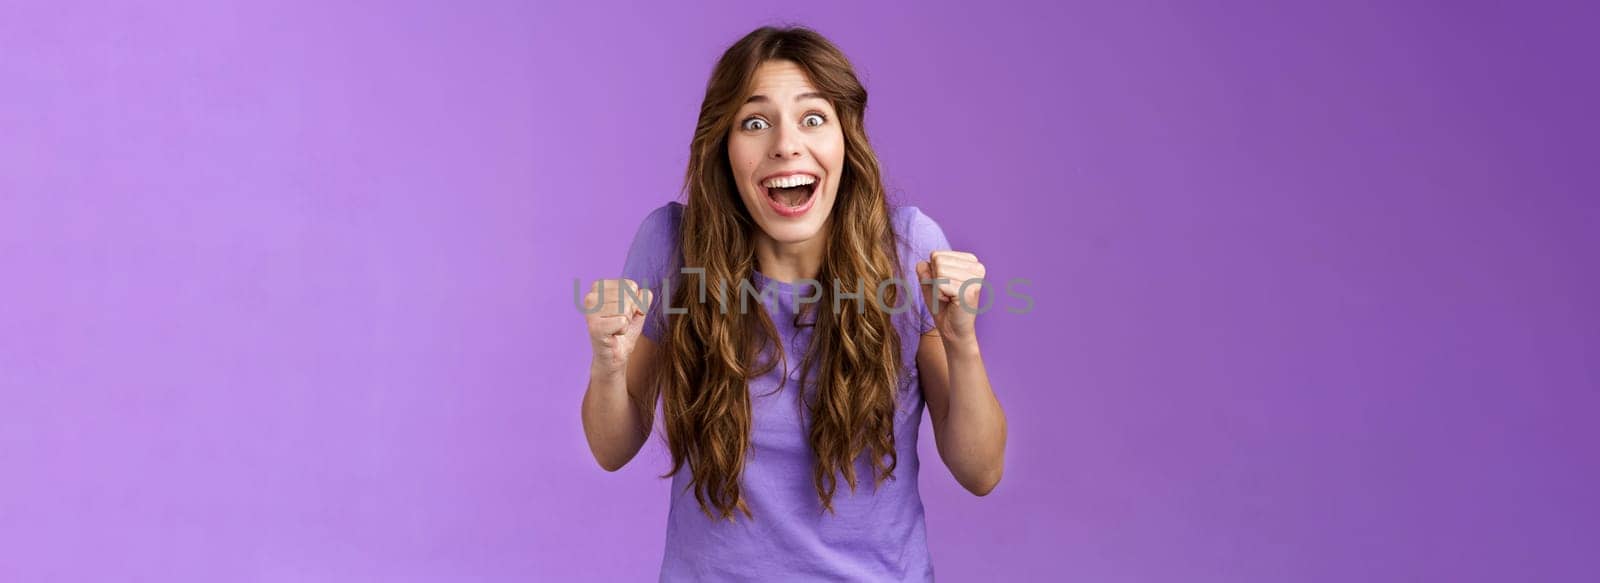 Cheerful hopeful cute female fan celebrating awesome news winning lottery yelling pleased happy smiling broadly fist pump joyfully happiness success triumph pose purple background.